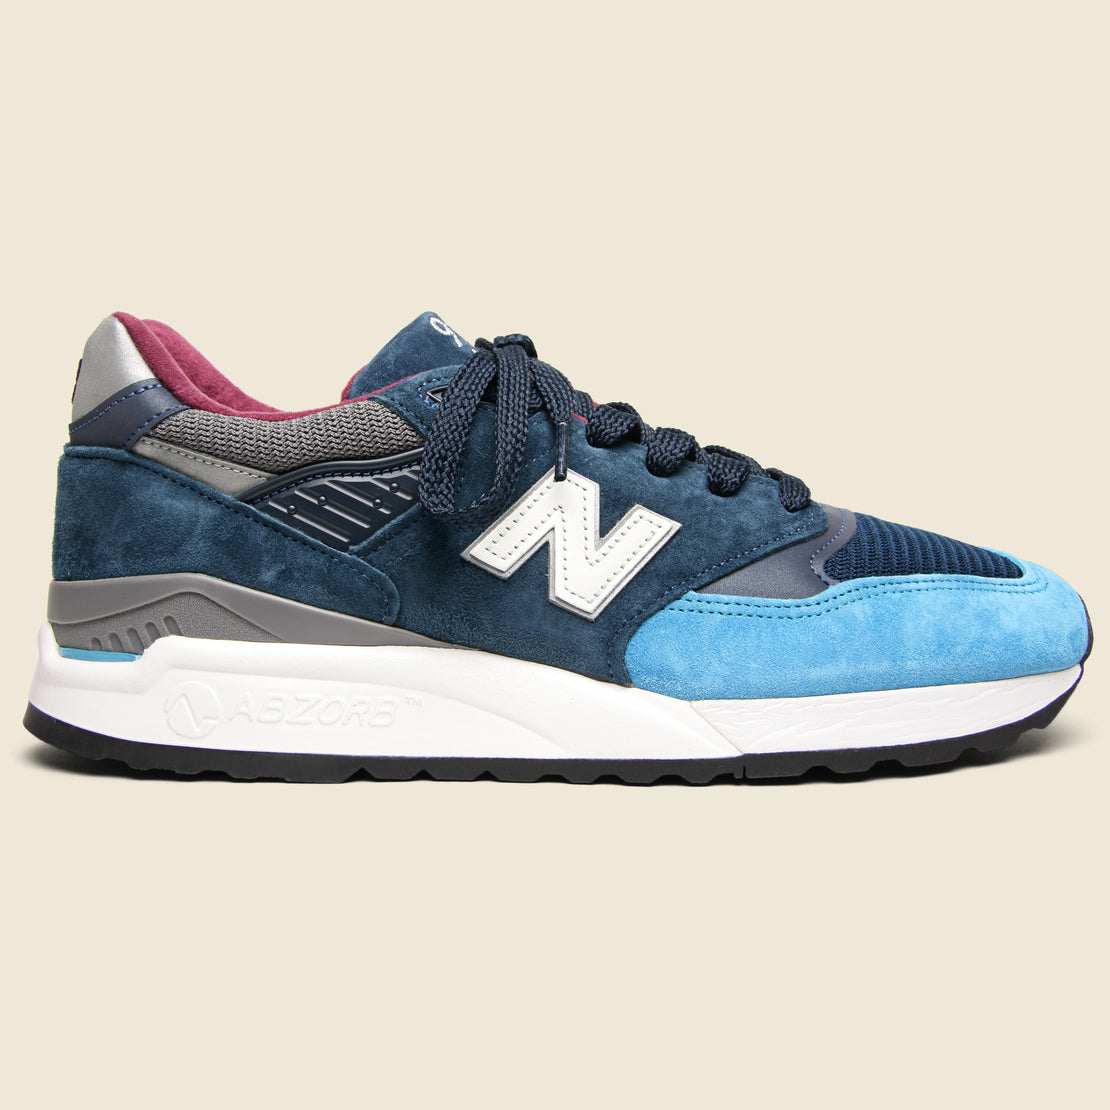 New Balance 998 Sneaker - Blue/Grey